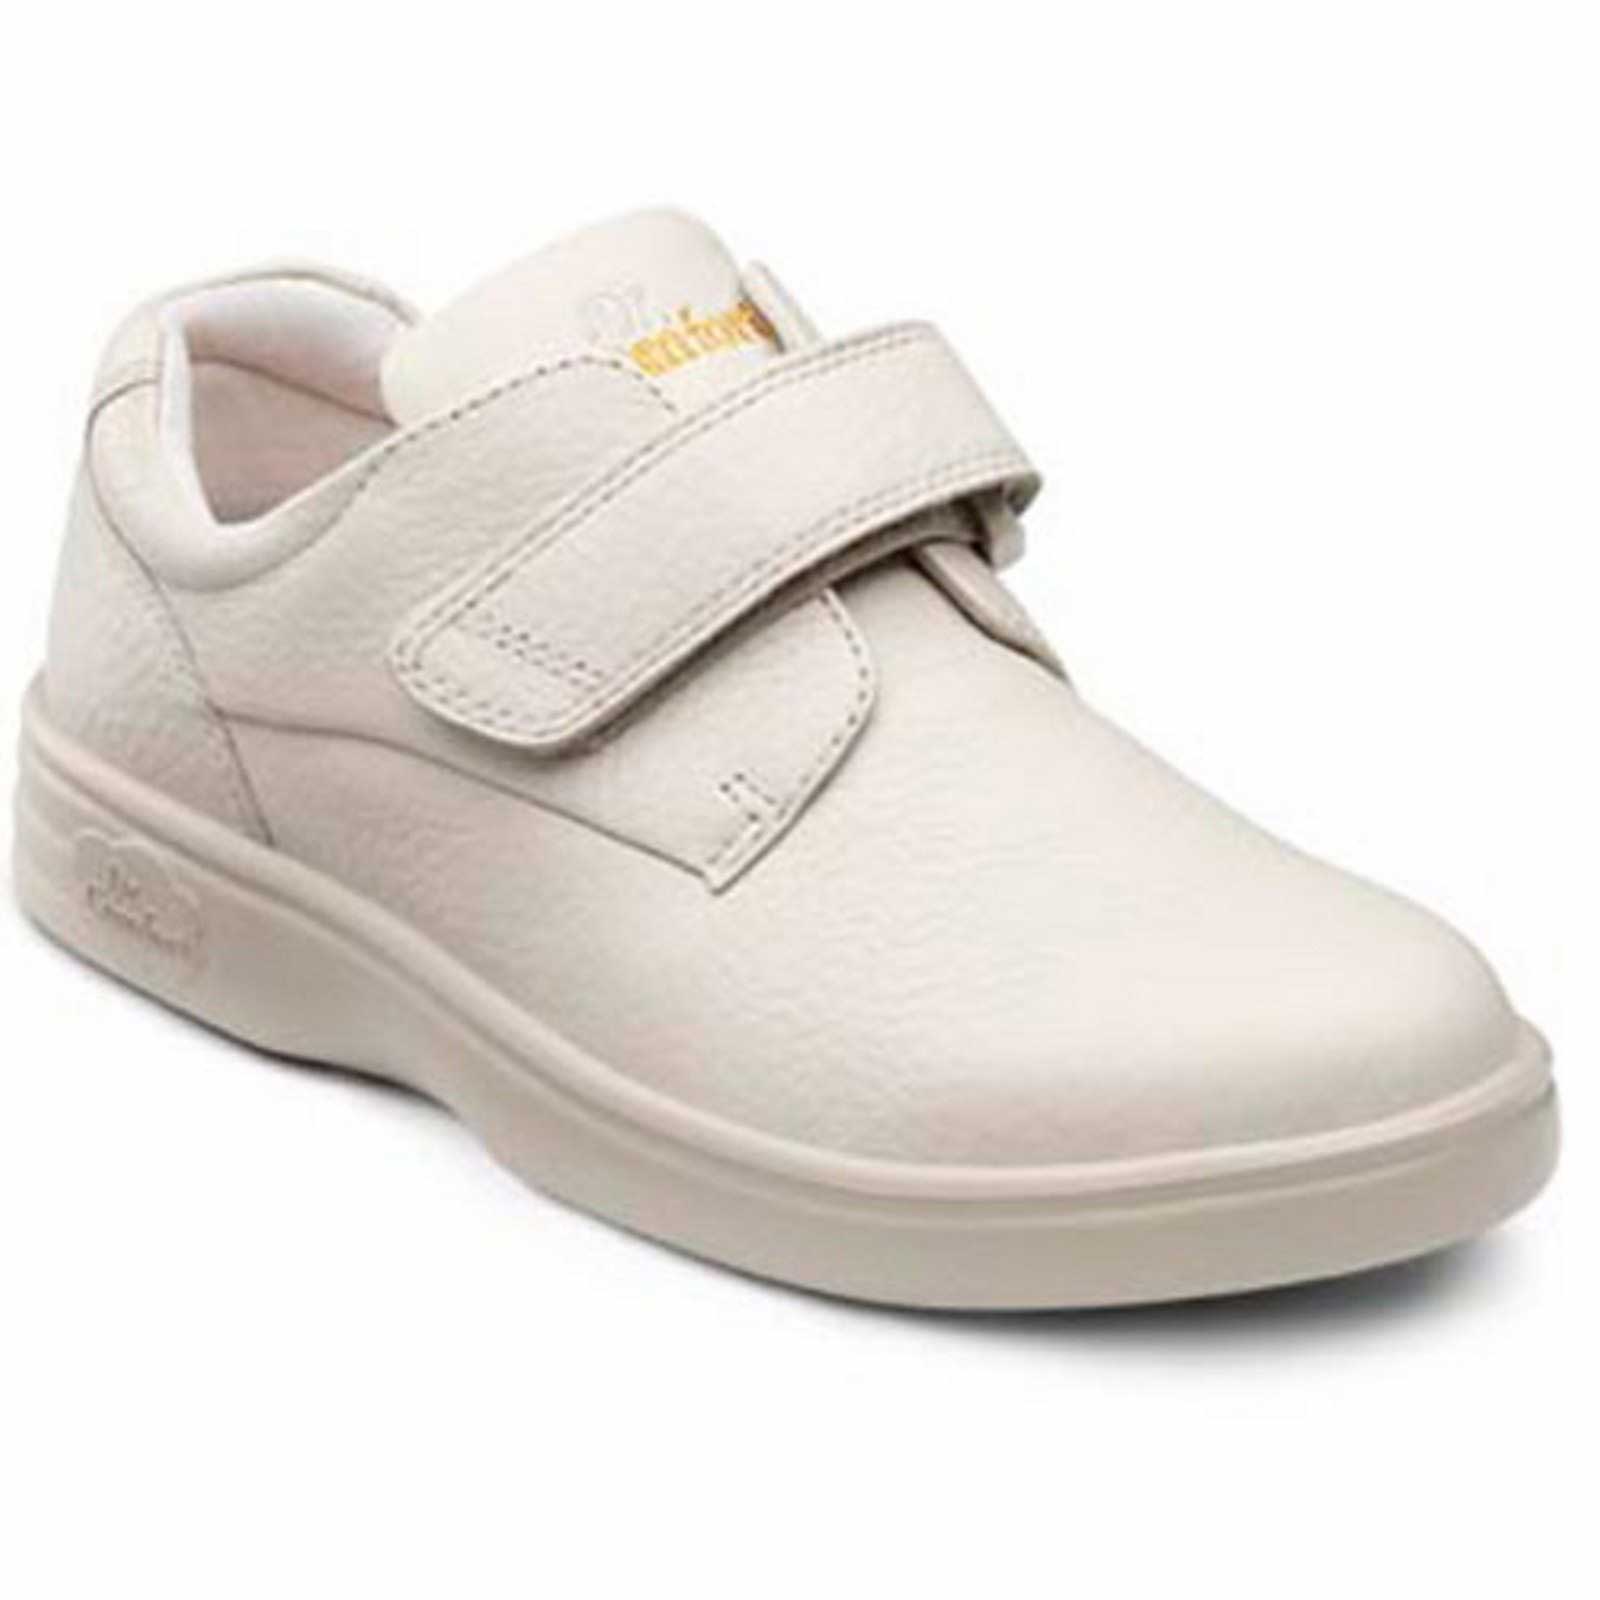 Dr Comfort Maggy Women's Therapeutic Diabetic Extra Depth Shoe | eBay